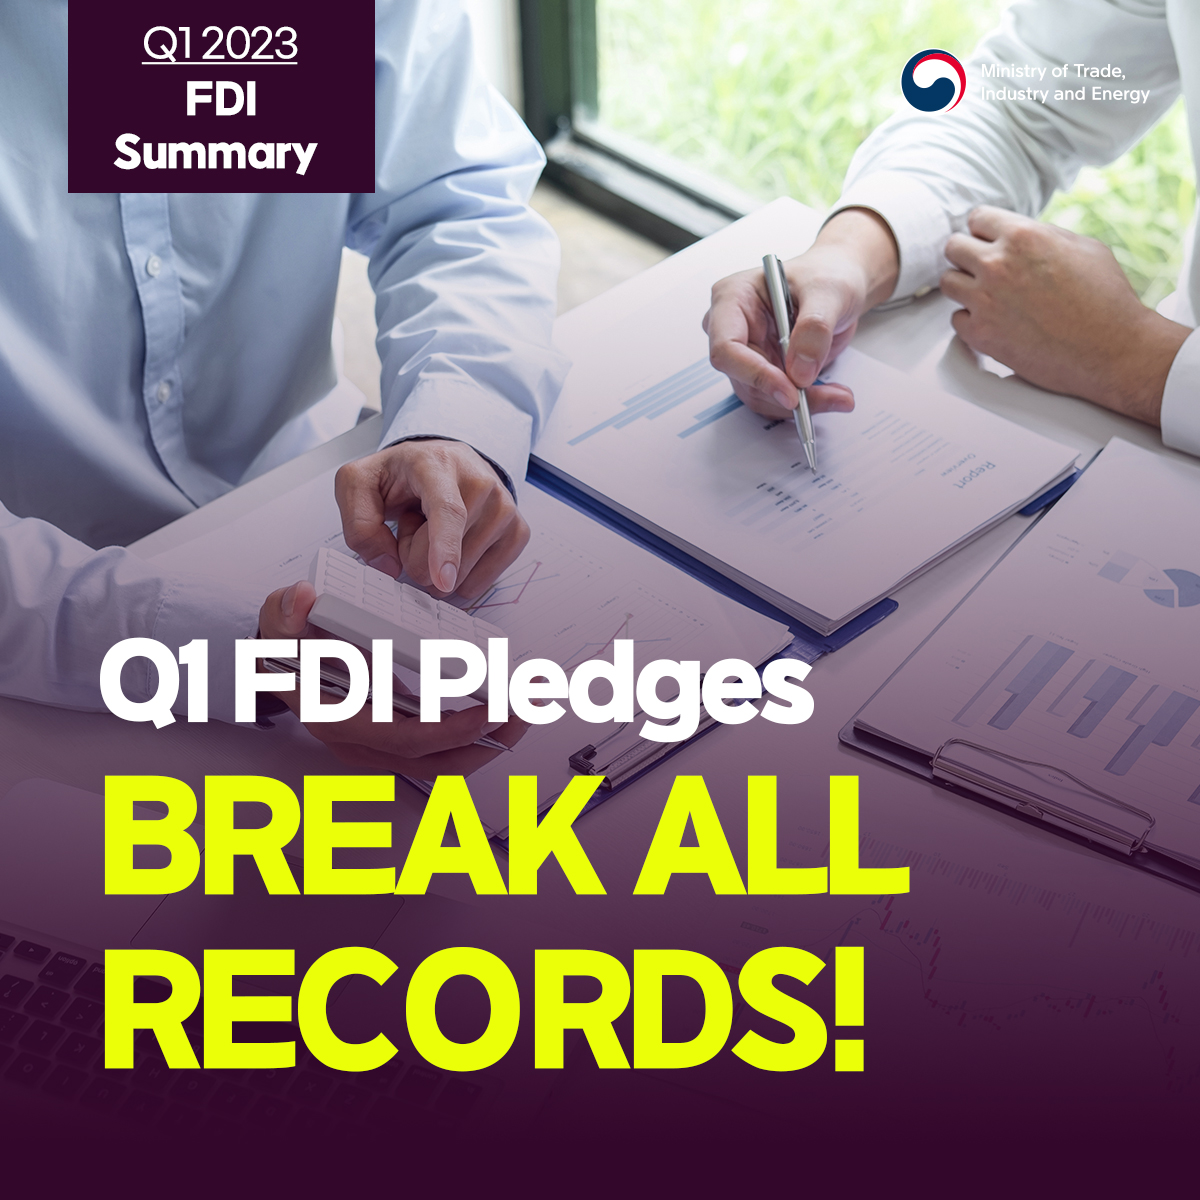 FDI pledges reach record-breaking highs in Q1 2023 Image 0